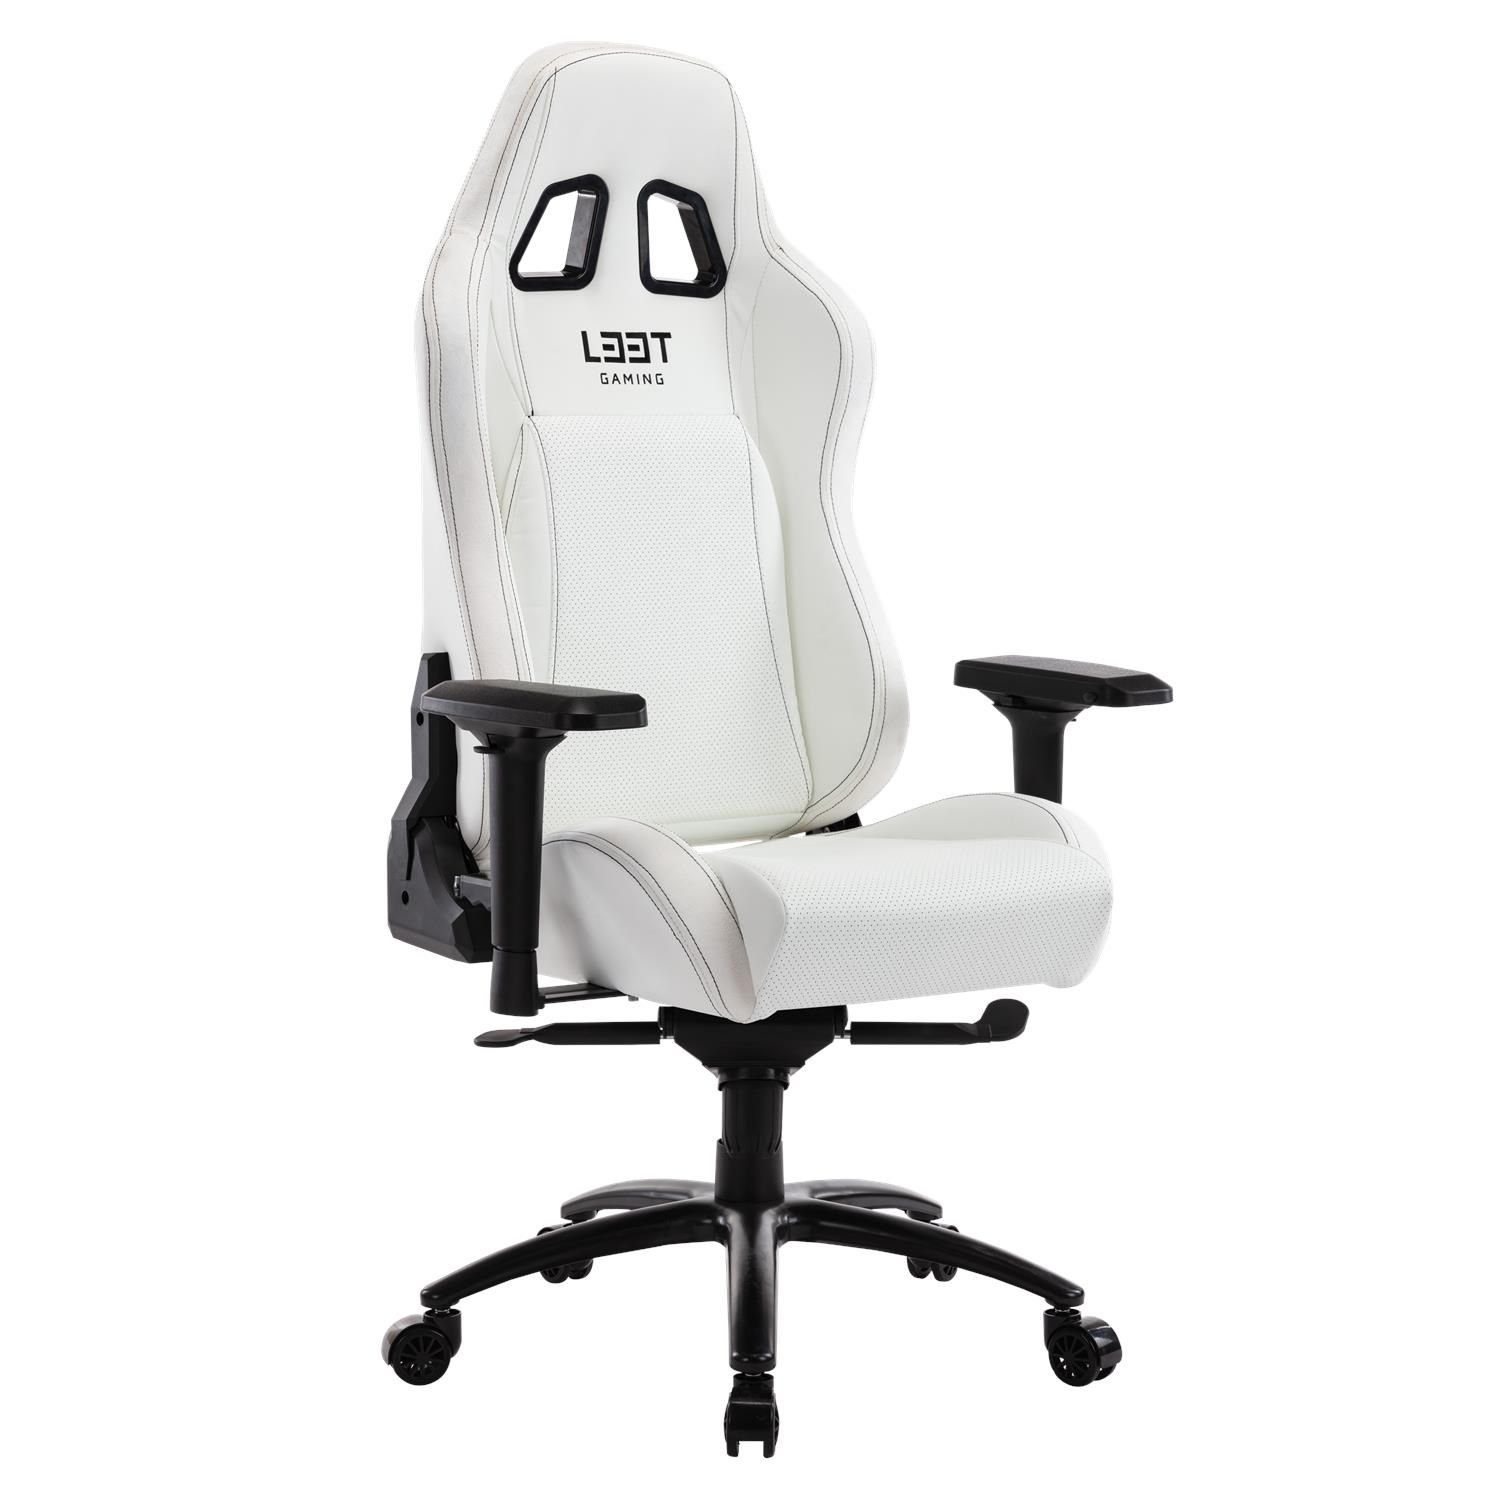 (kein weiß Bürostuhl neigbar, belastbar Gaming höhenverstellbar, Pro Set), Comfort Racing 145kg Gaming-Stuhl E-Sport L33T Stuhl bis